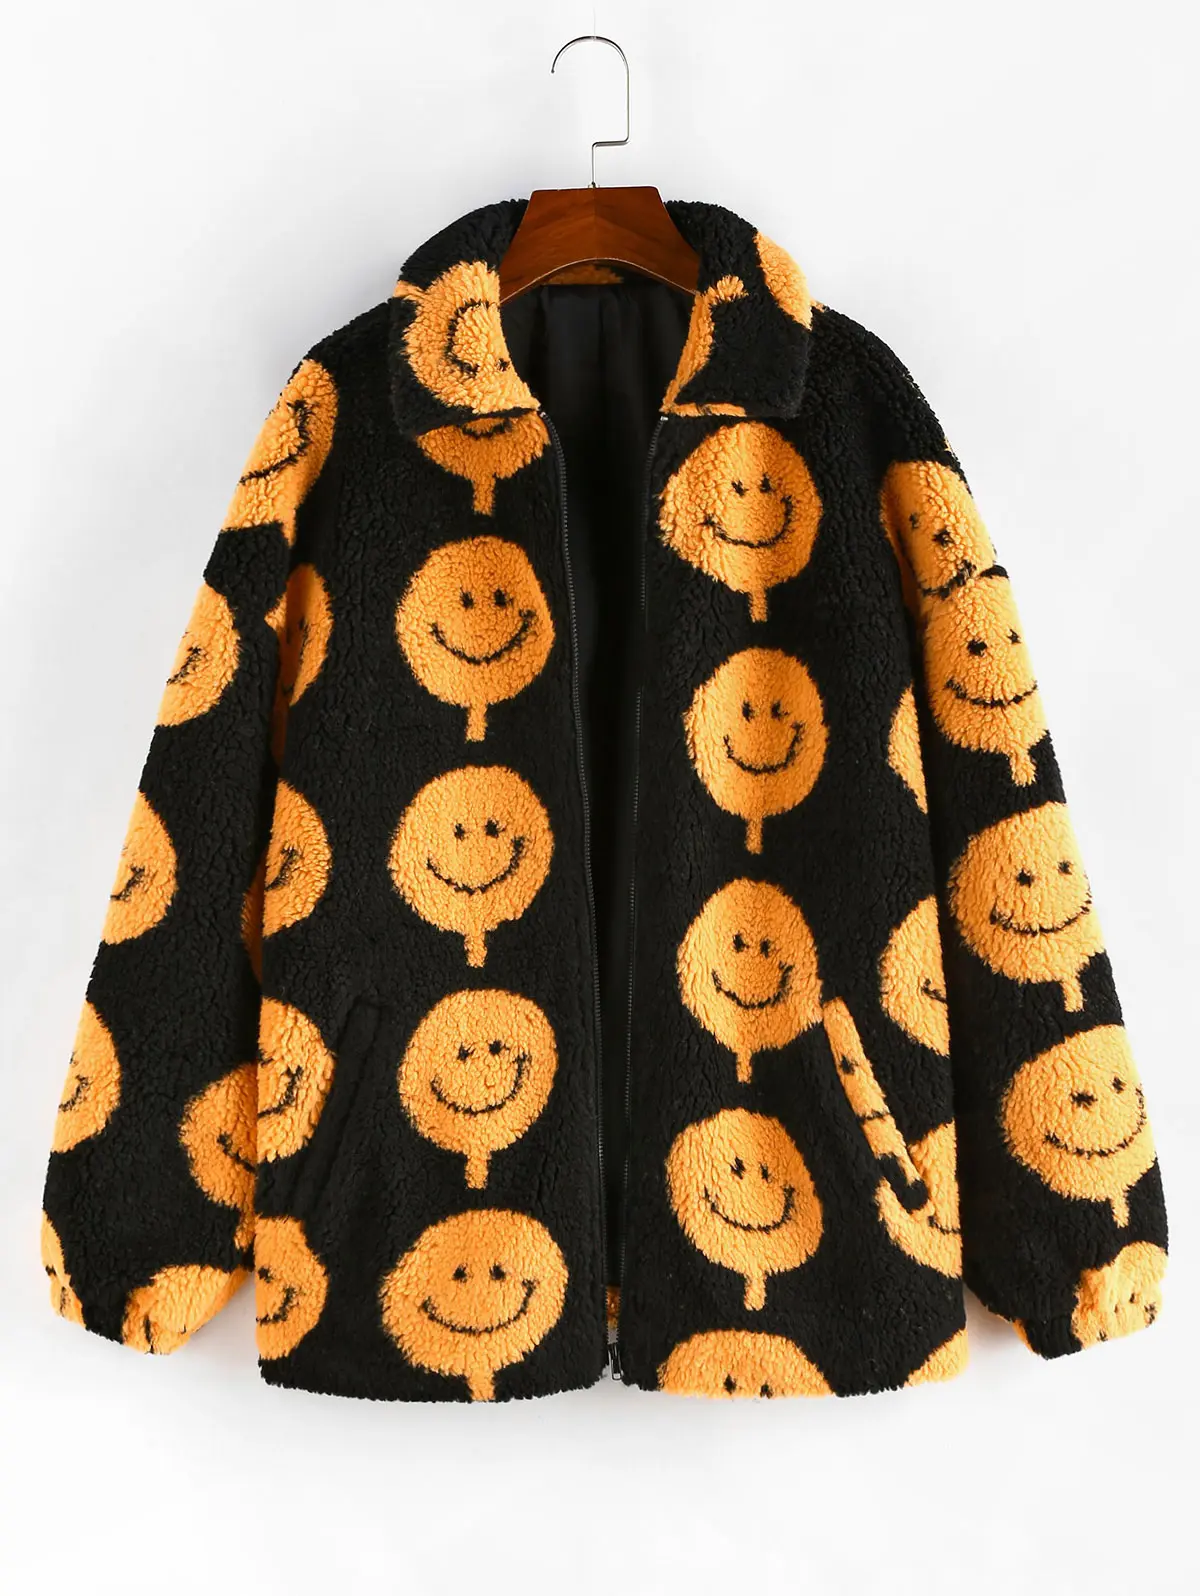 Smiley Pattern Zip Up Teddy Jacket - A2 Jackets